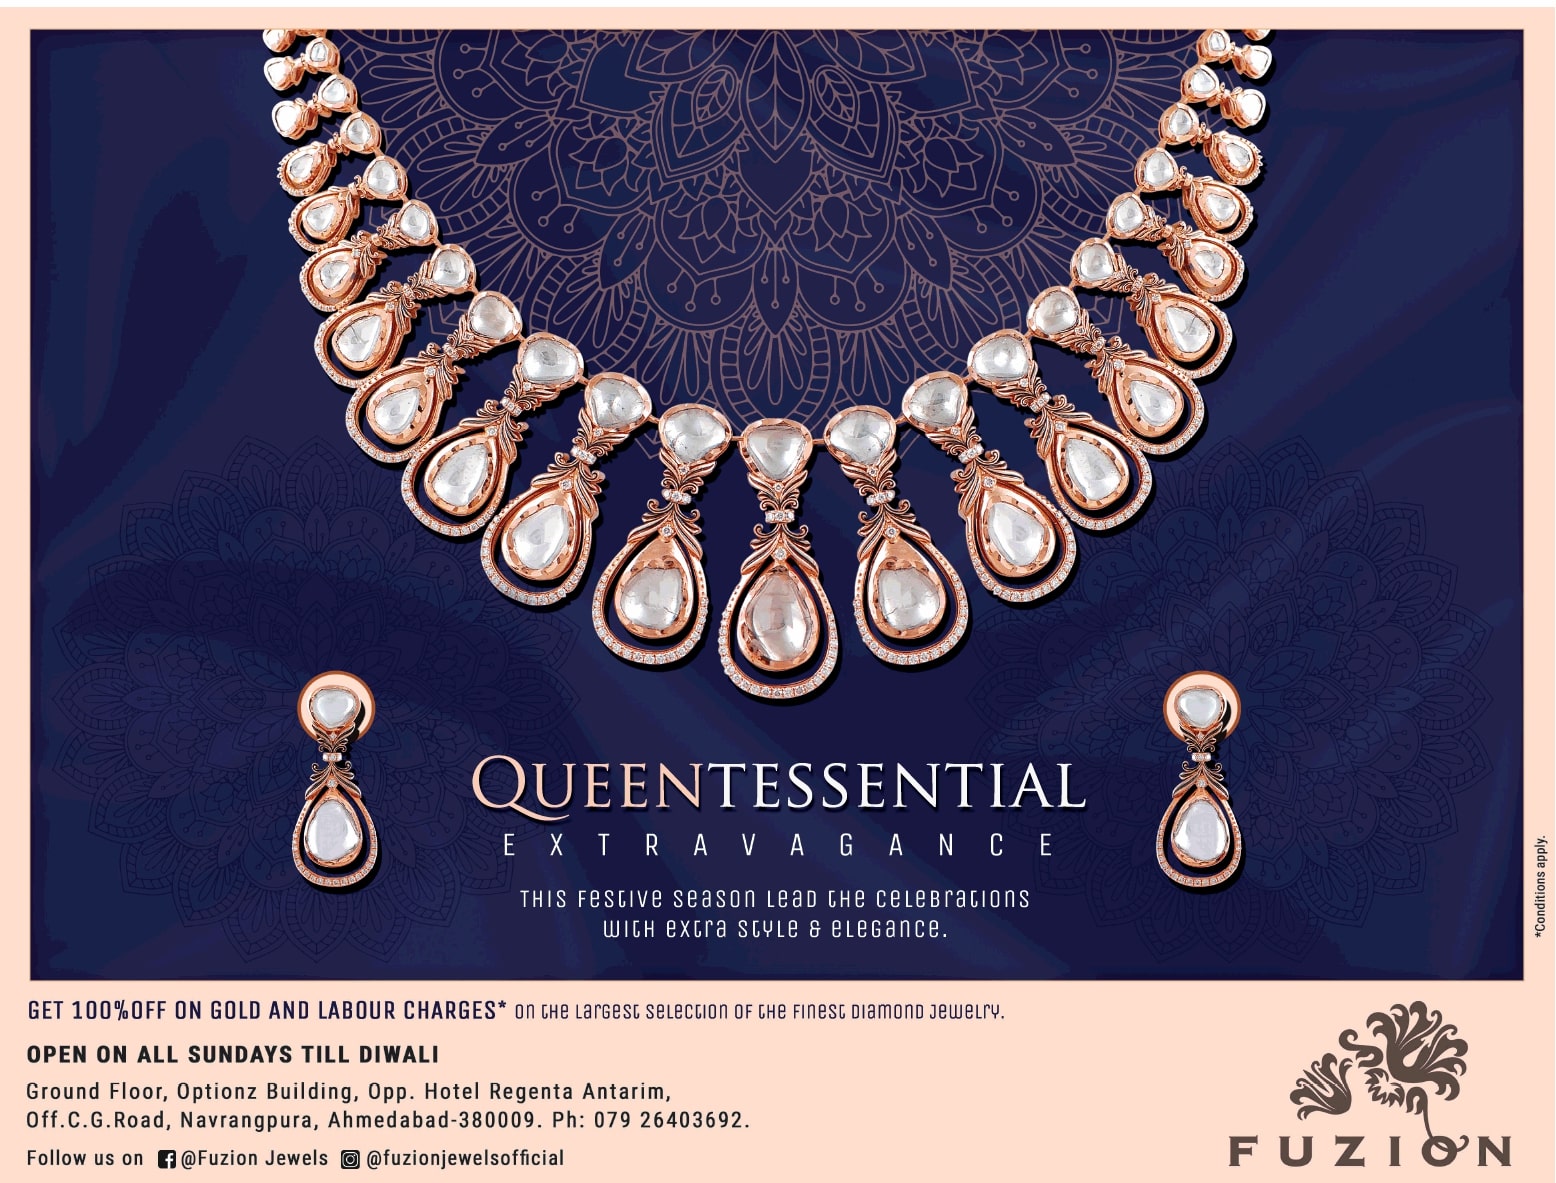 Fuzion Queentessential Extravagance Finest Diamond Jewelry Ad - Advert ...